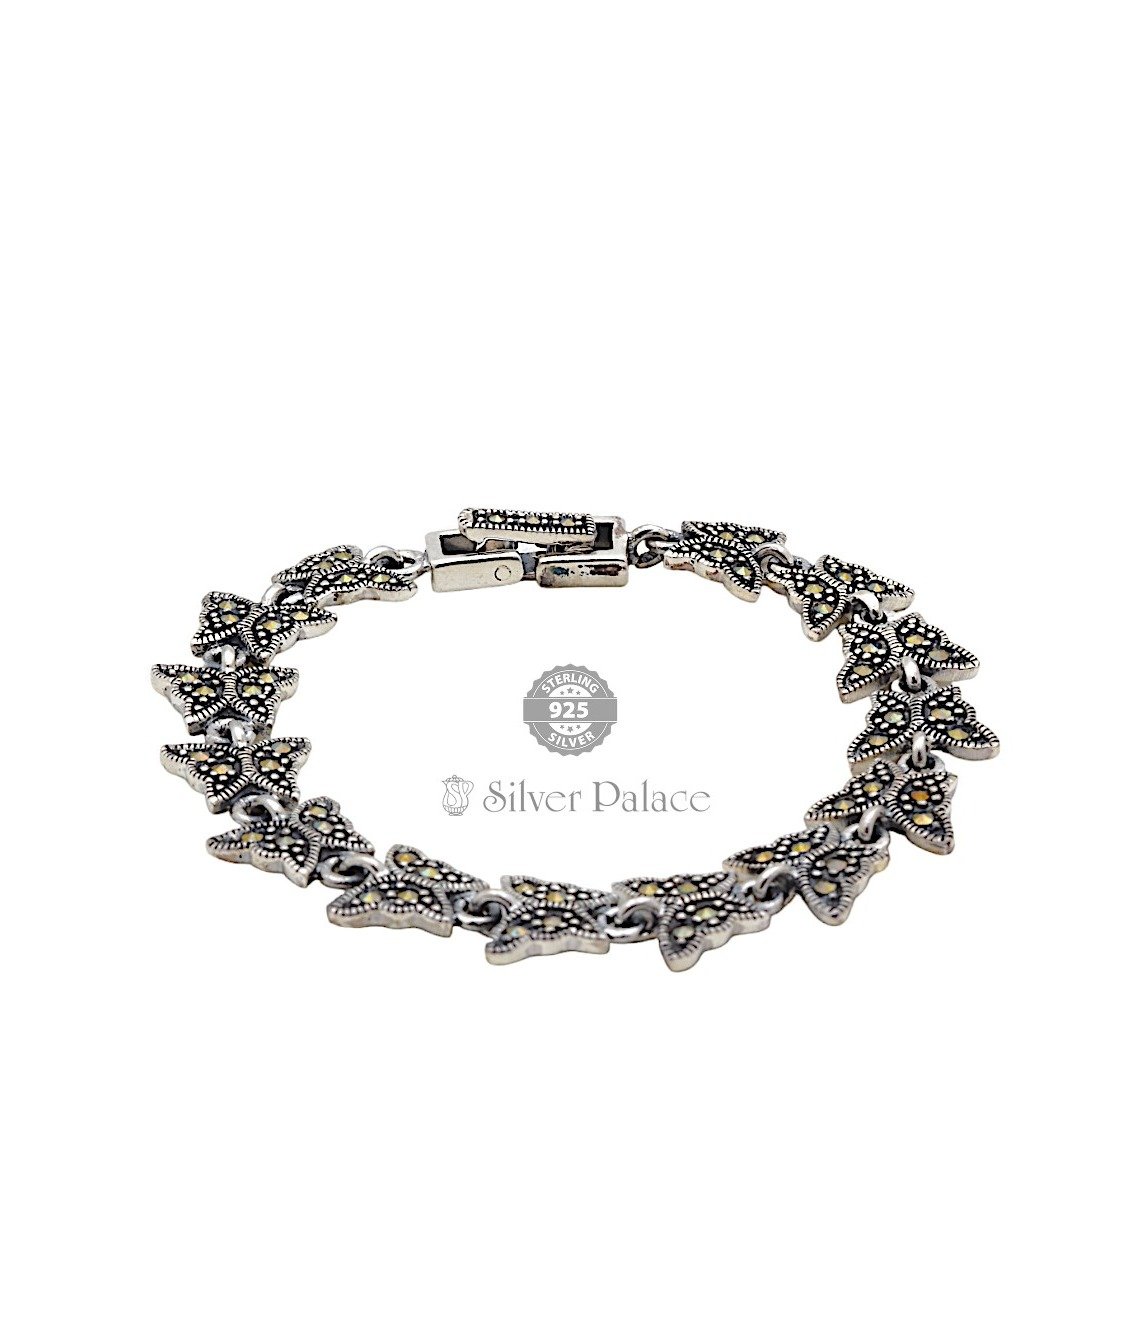  92.5 Sterling Silver Marcasite Butterfly bracelet For Girls Use